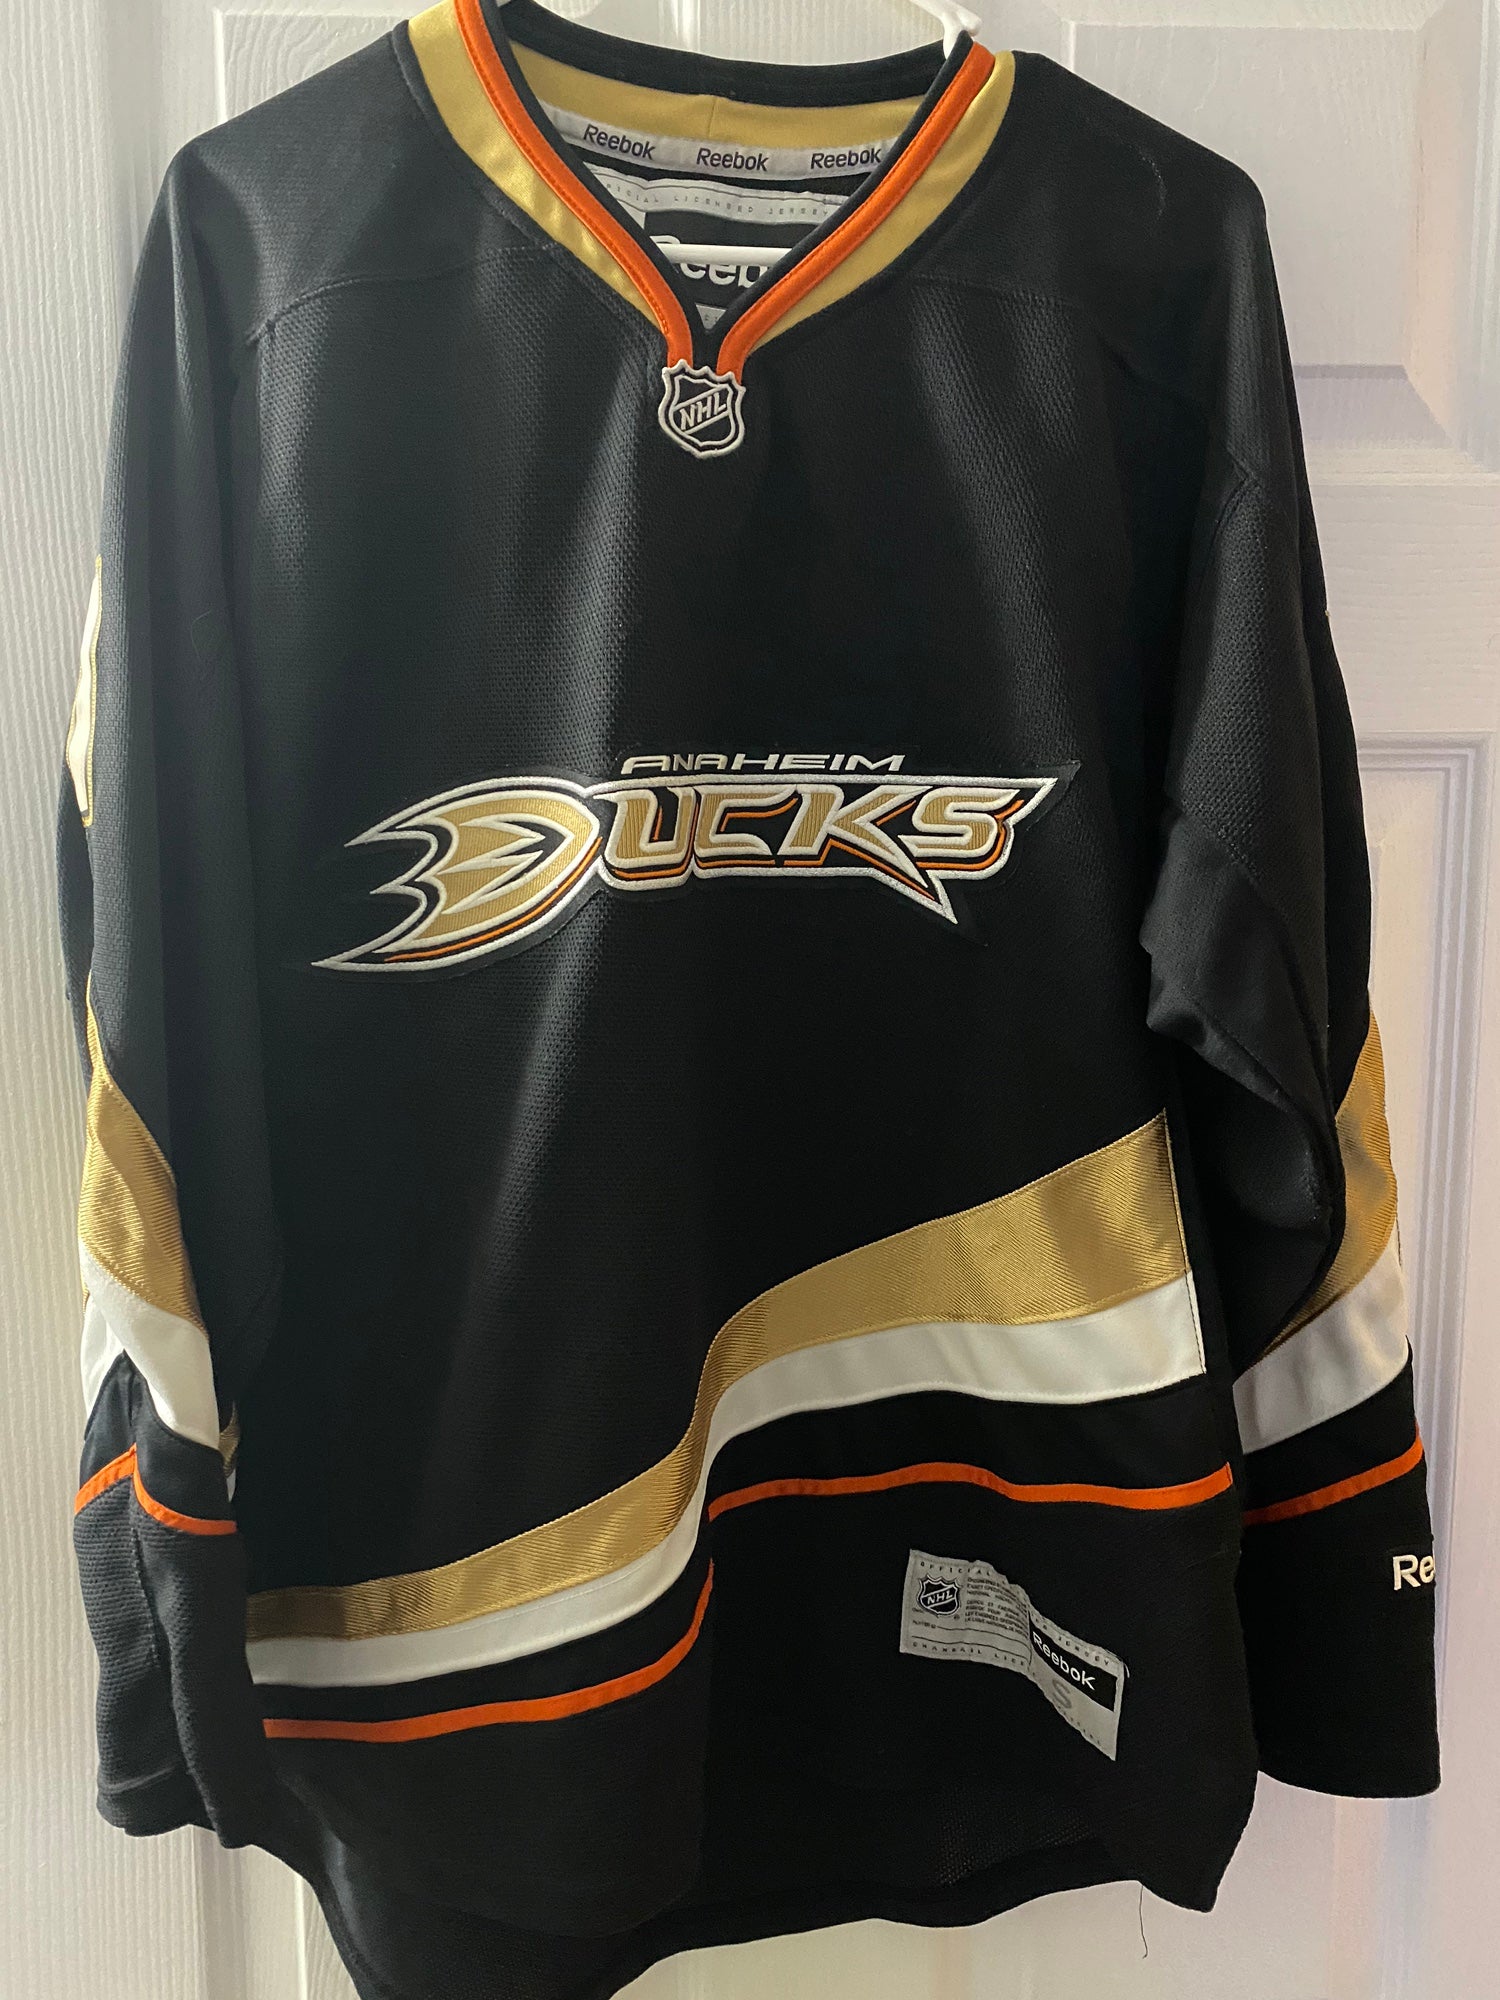 Anaheim Ducks Reebok Blank Premier Home Jersey - Black